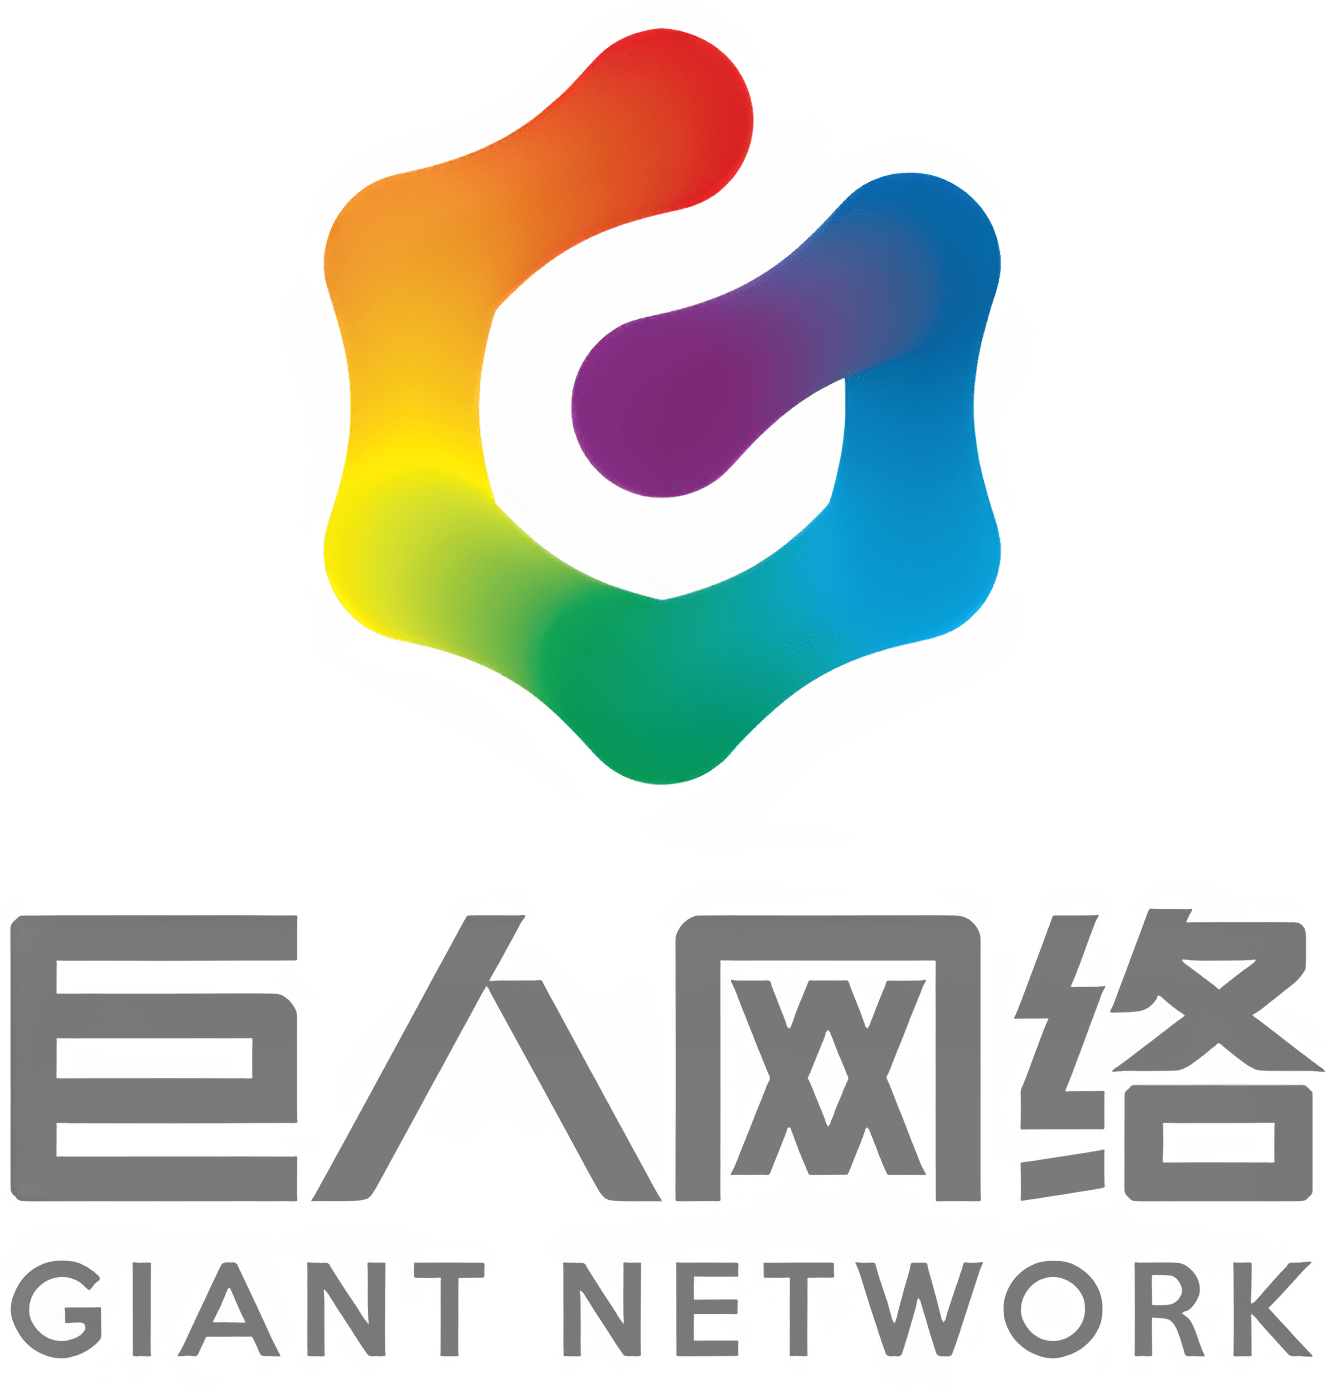 Giant Network Group logo large (transparent PNG)